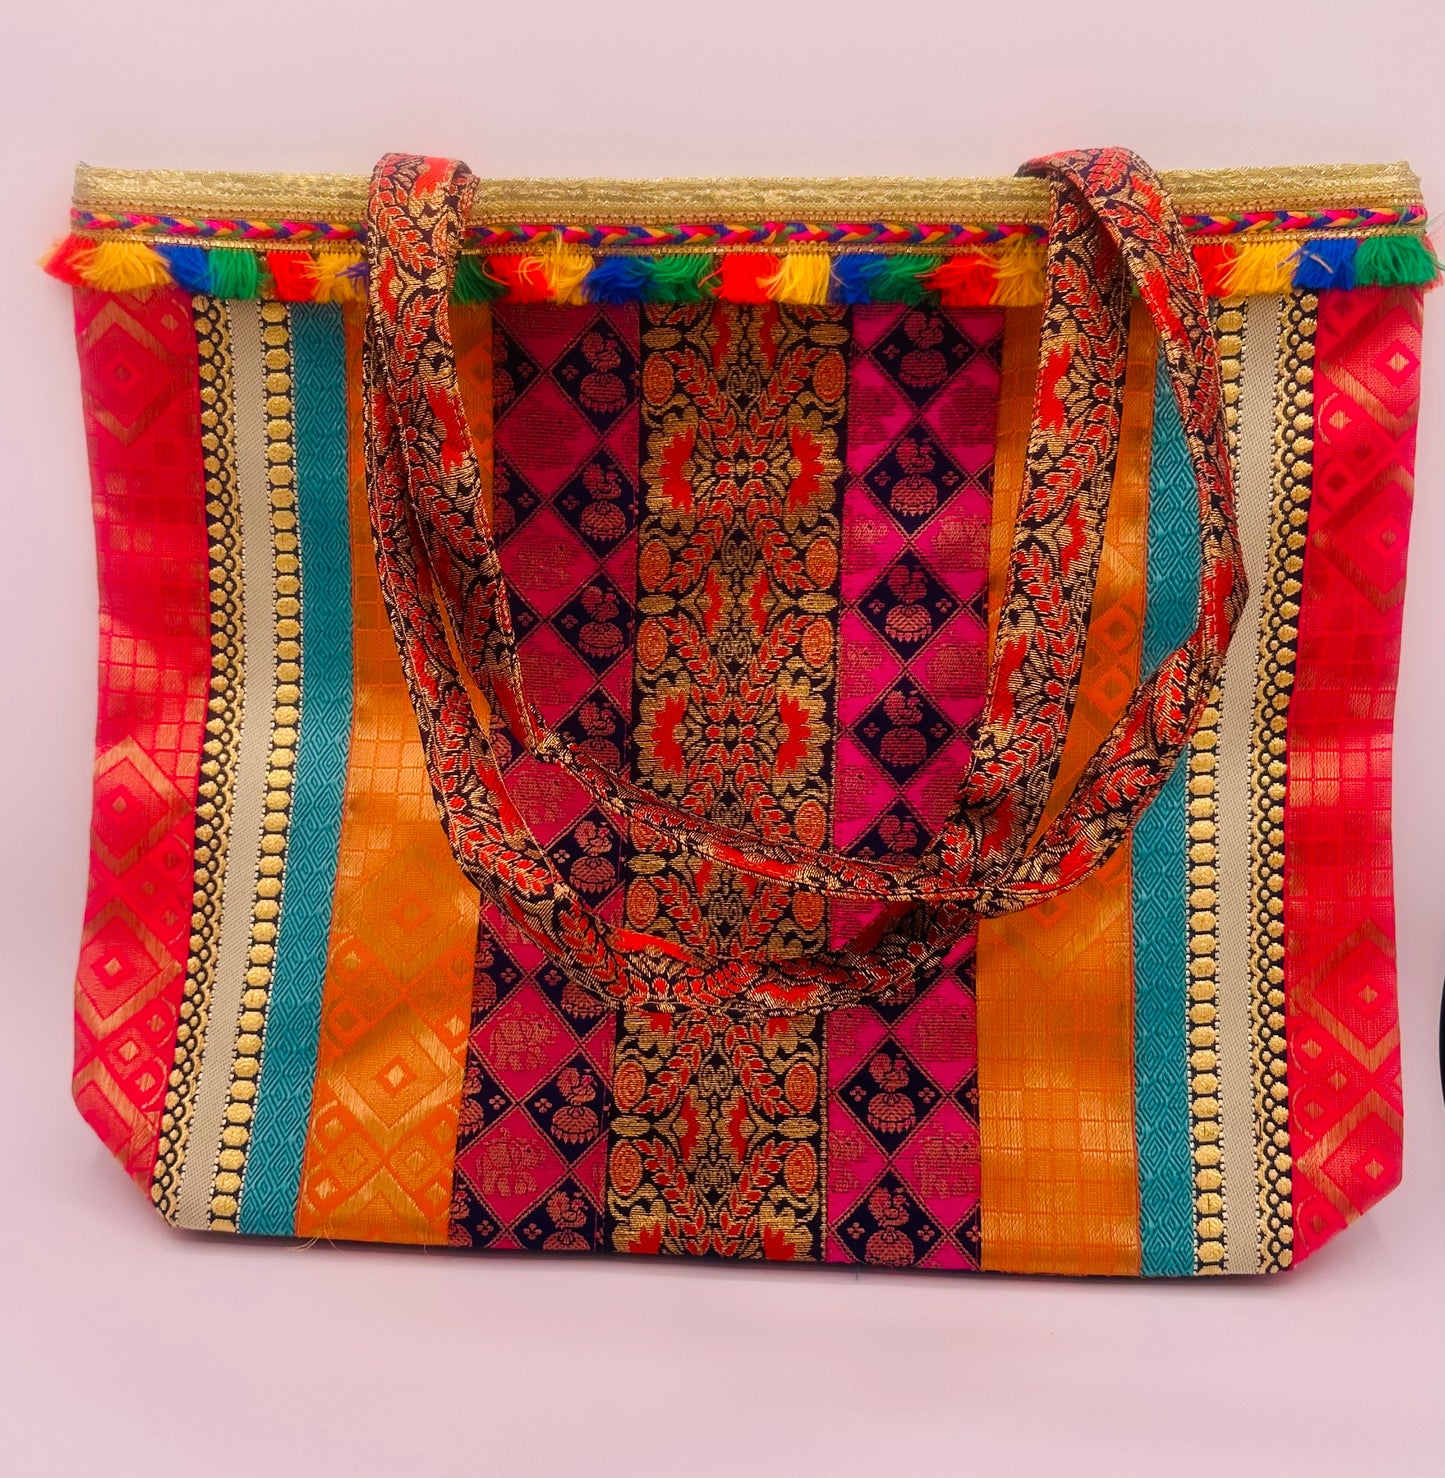 Rainbow handbag